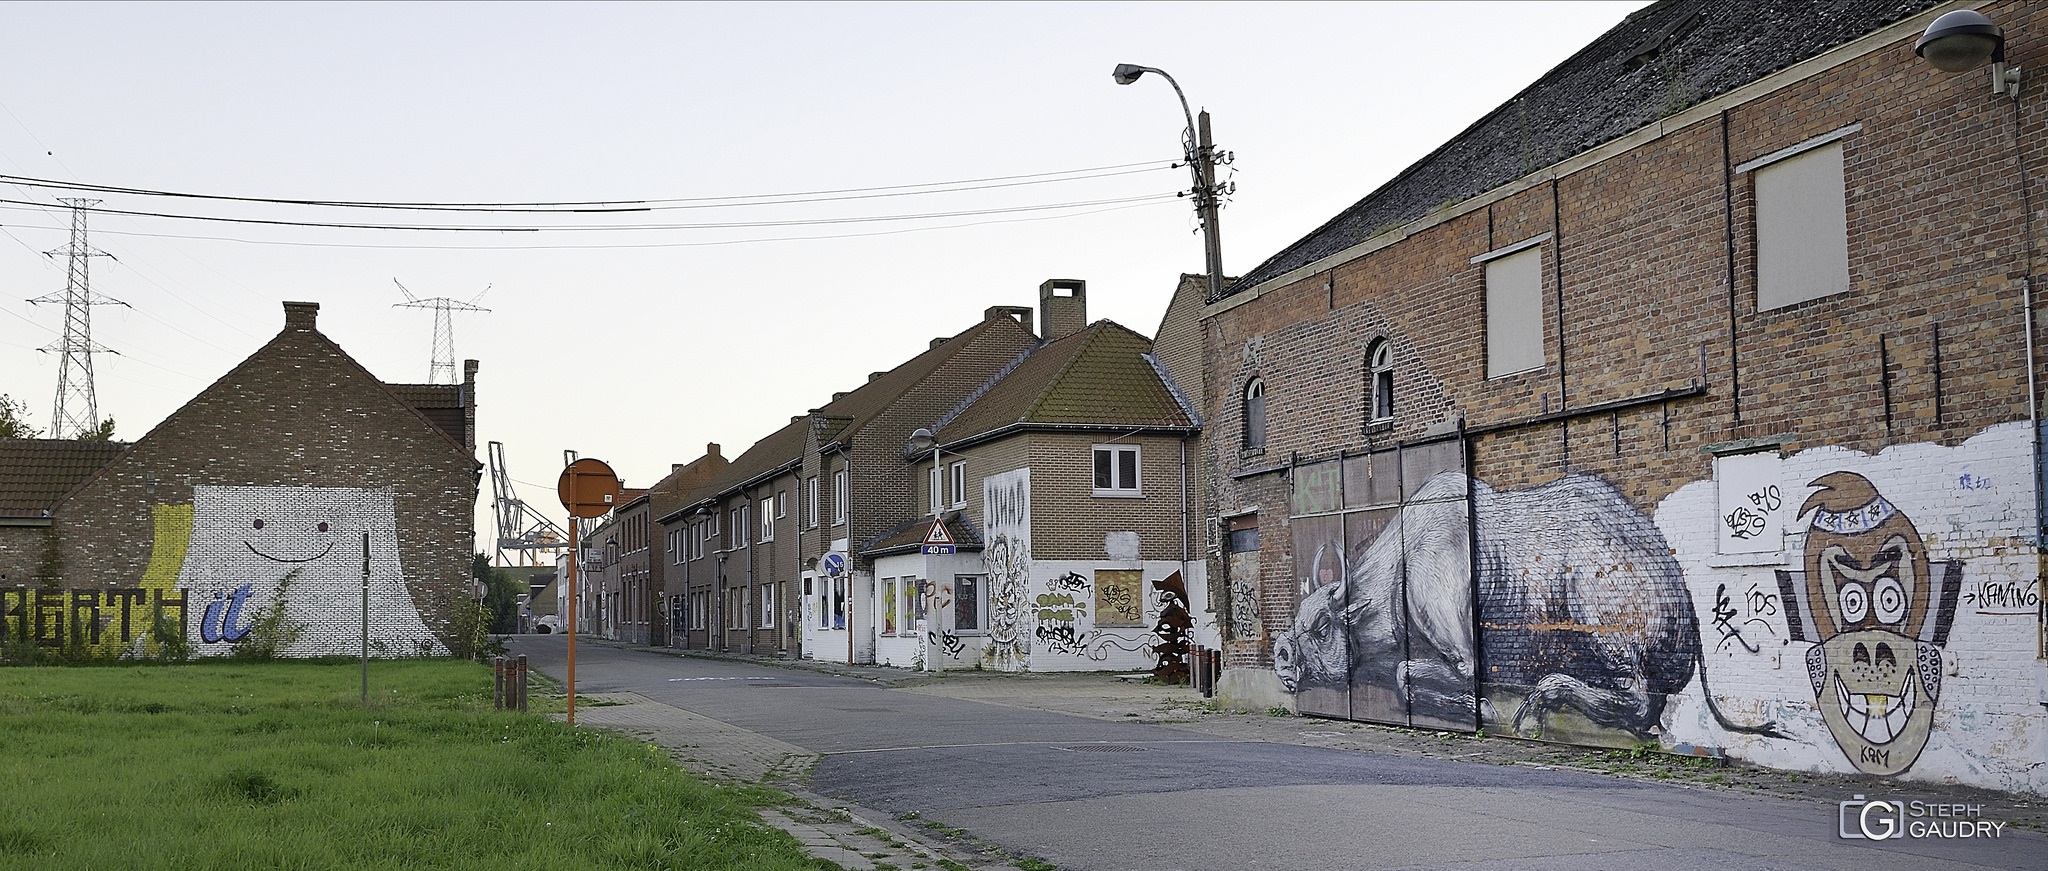 Doel / Doel, Abandoned street